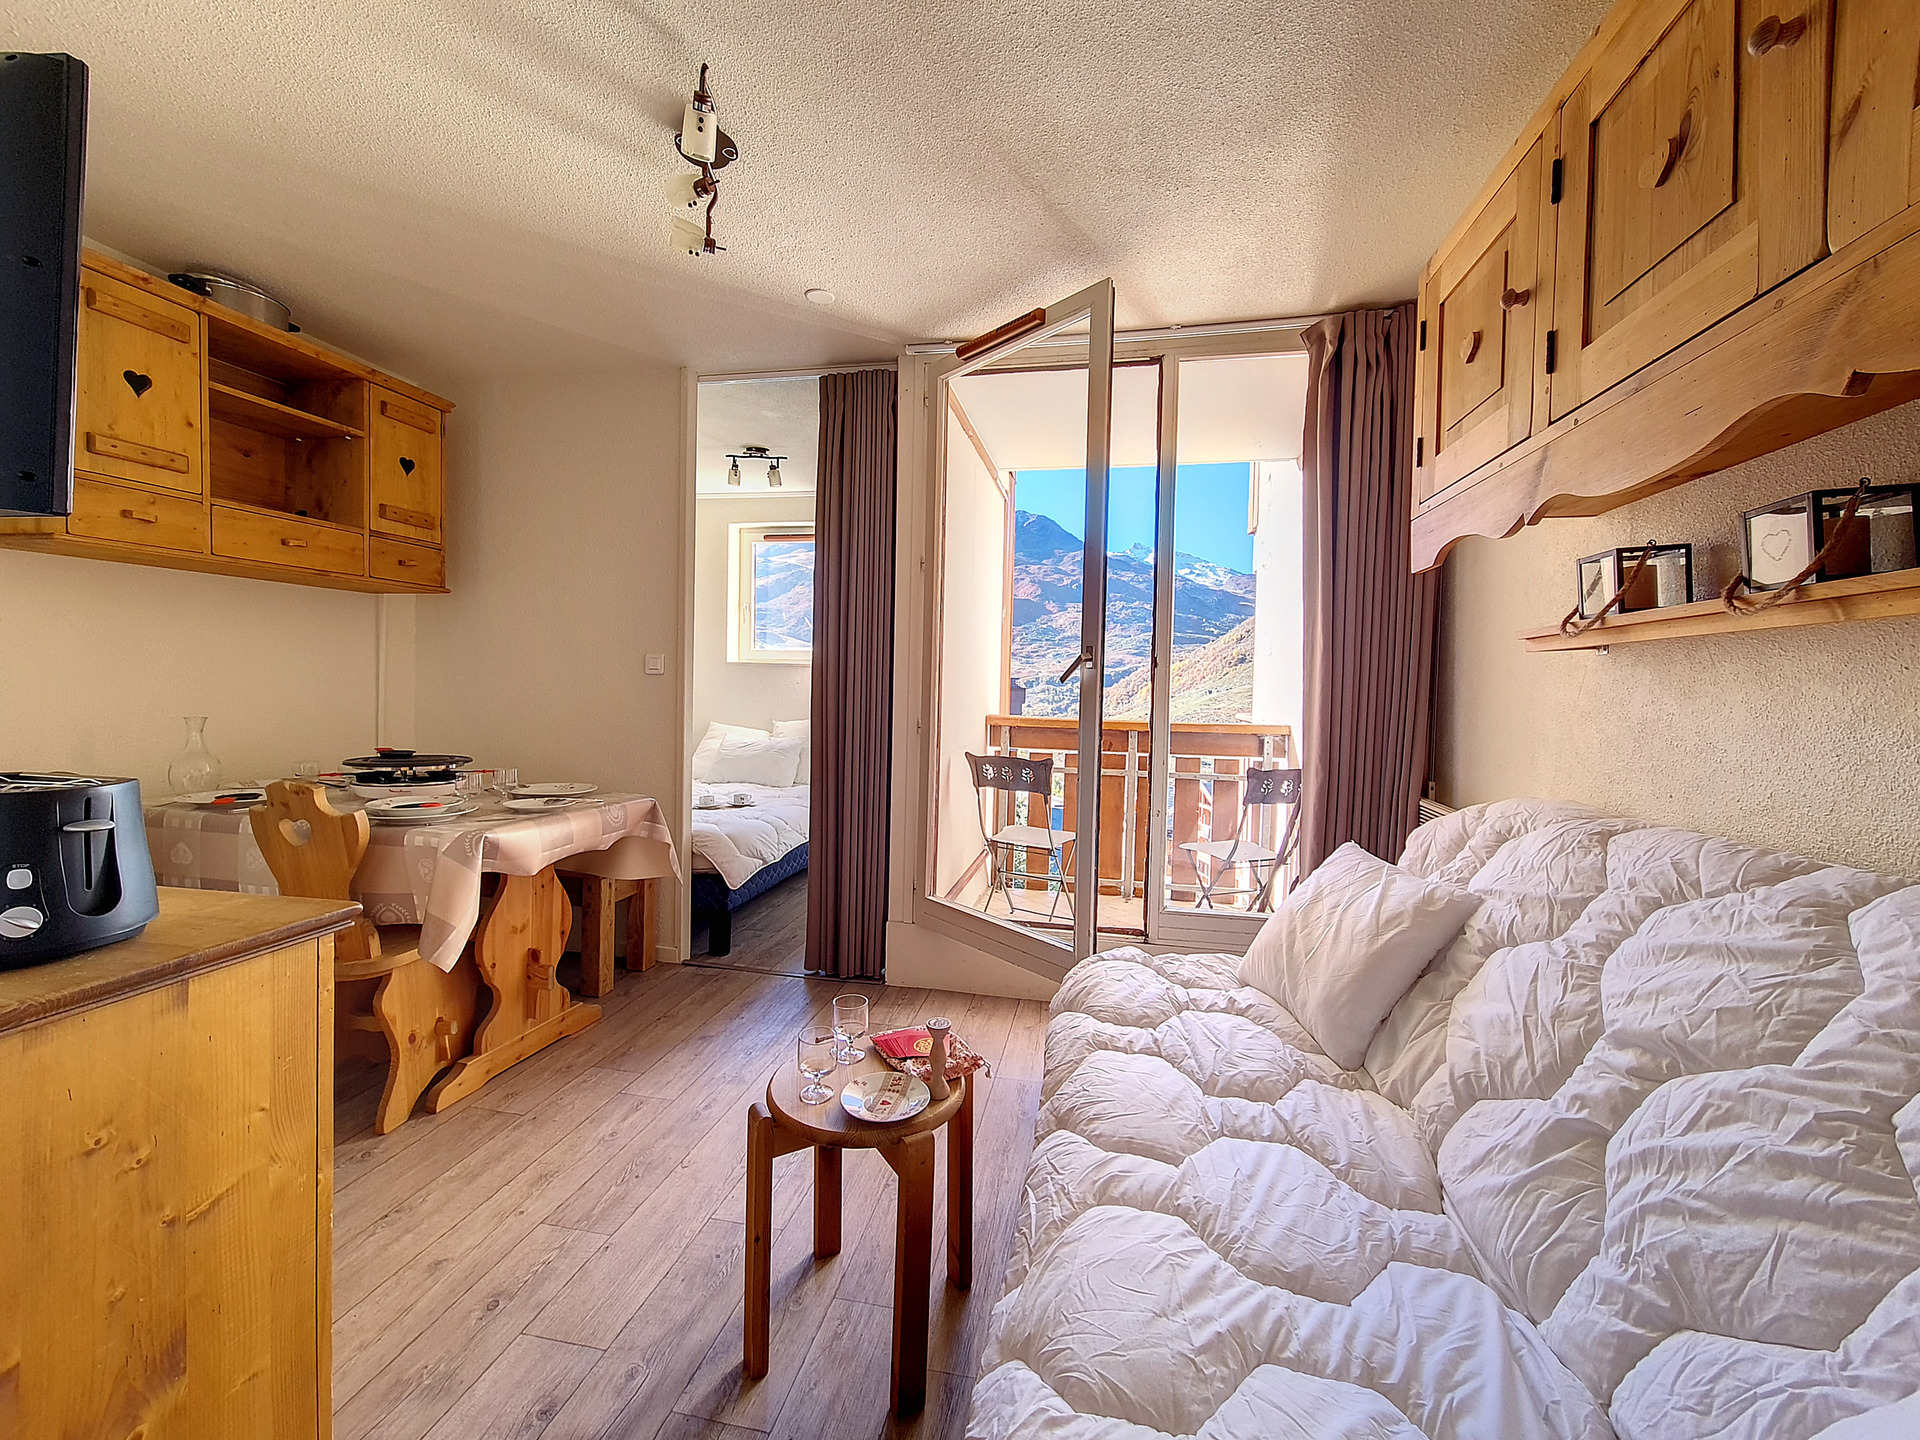 2 rooms 4 people - travelski home choice - Apartements SKI SOLEIL - Les Menuires Bruyères